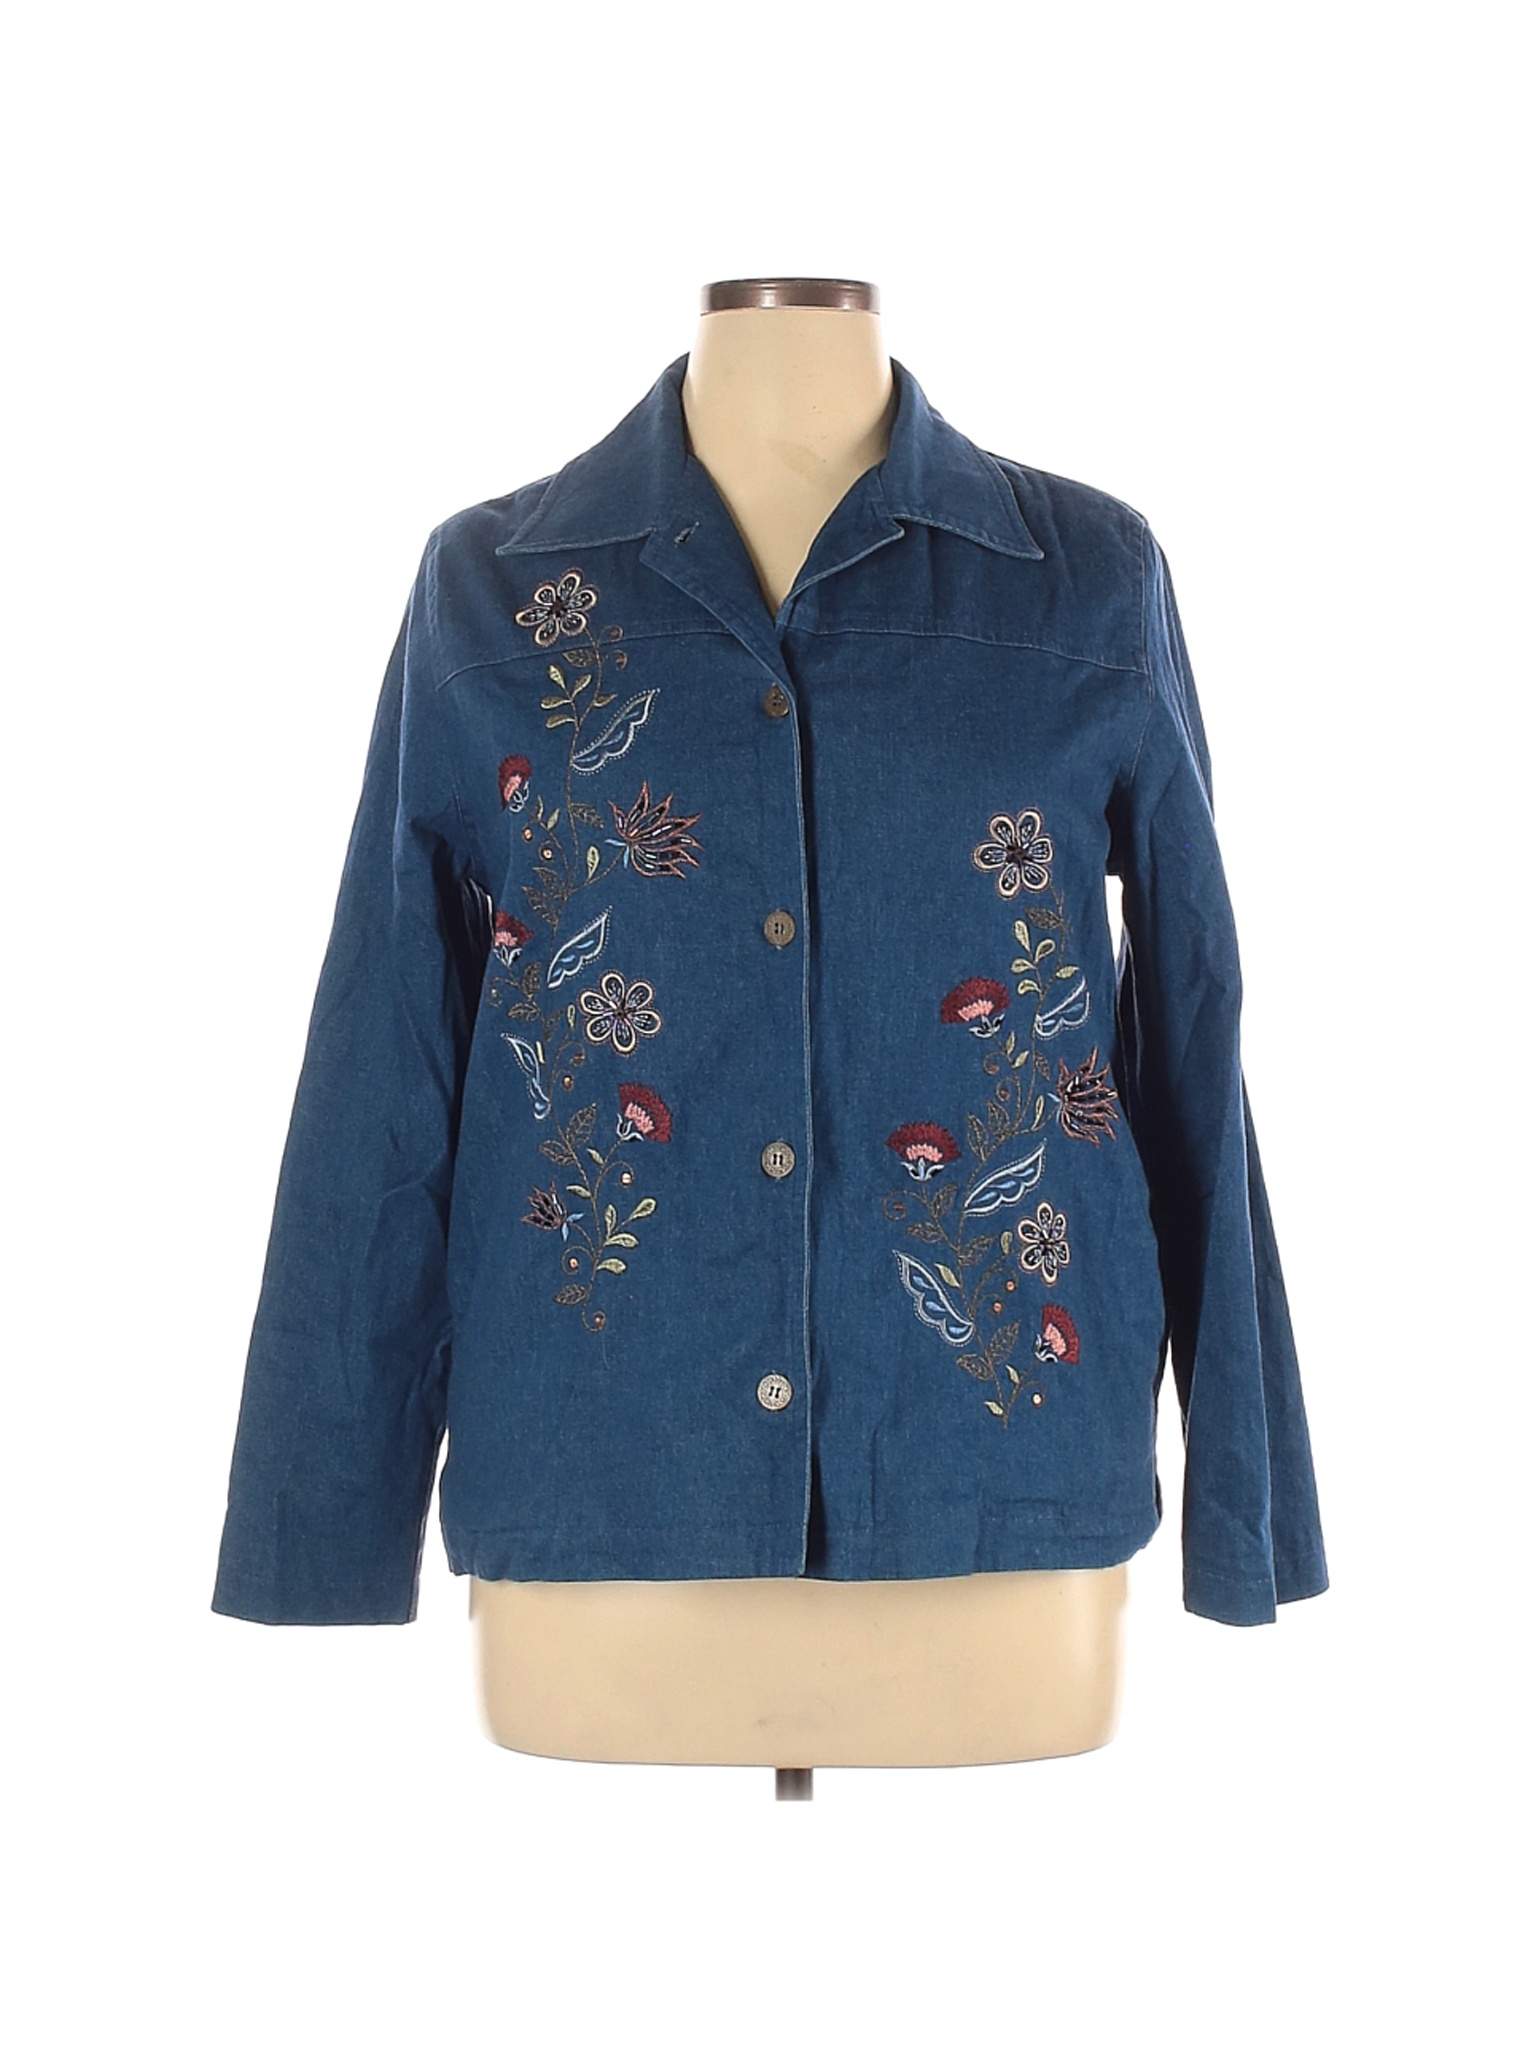 Alfred Dunner Women Blue Denim Jacket 14 | eBay